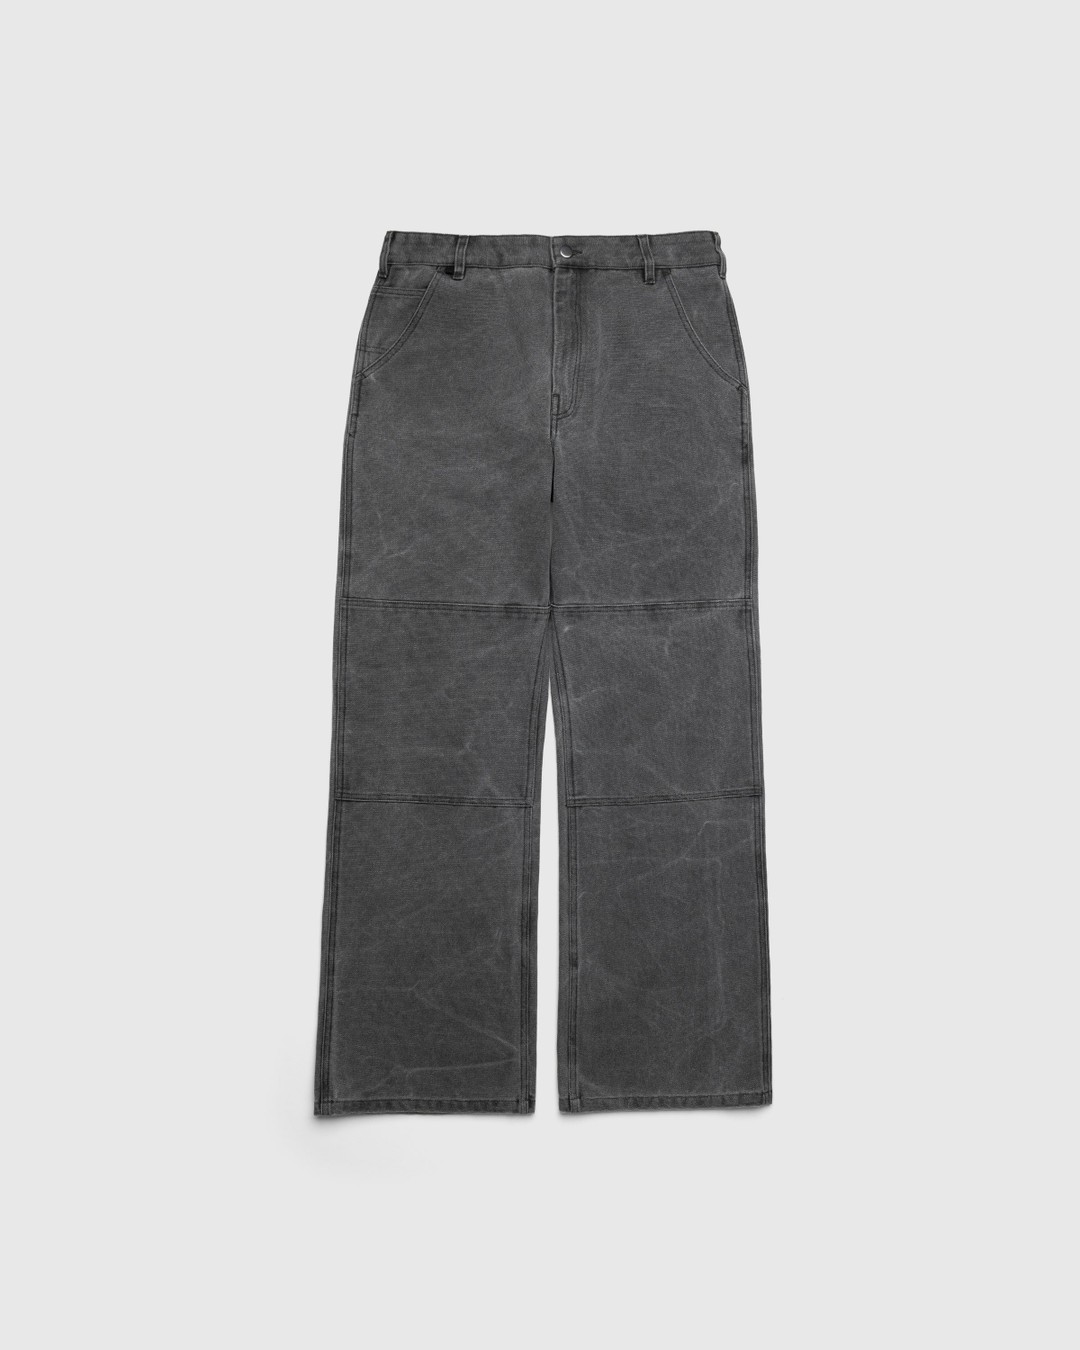 Acne Studios – Cotton Canvas Trousers Grey - Pants - Grey - Image 1